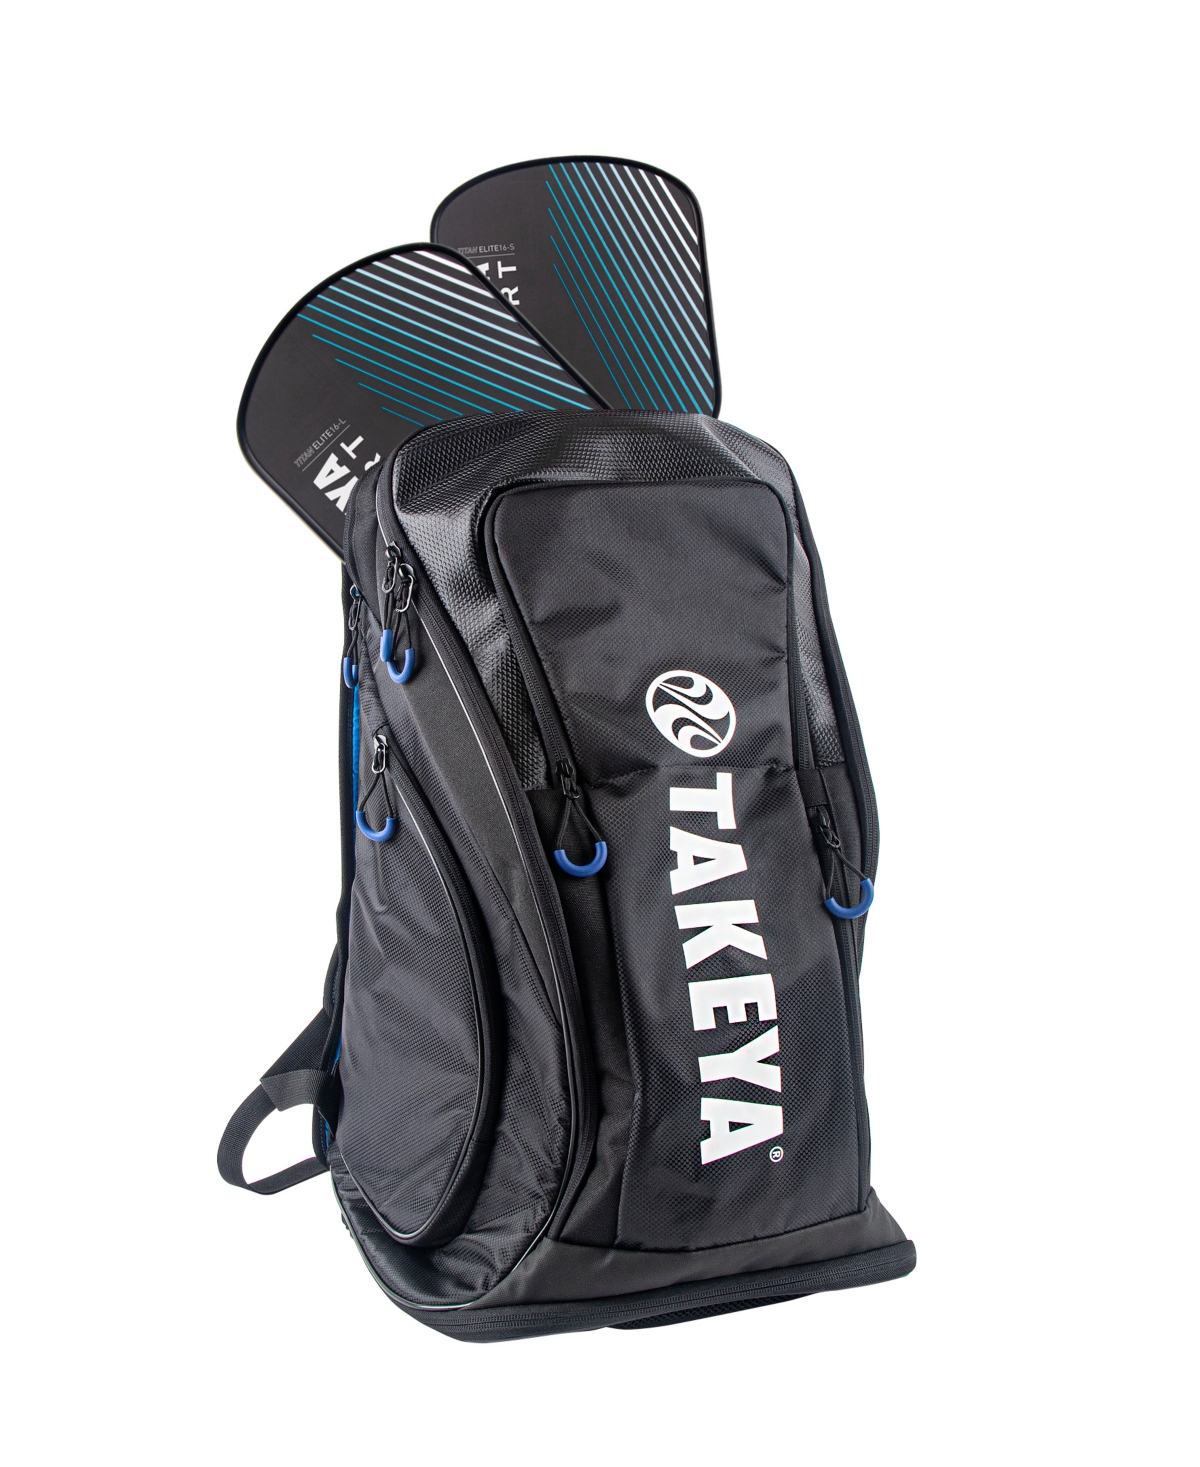 Takeya Sport Actives Pb Backpack In Onyx